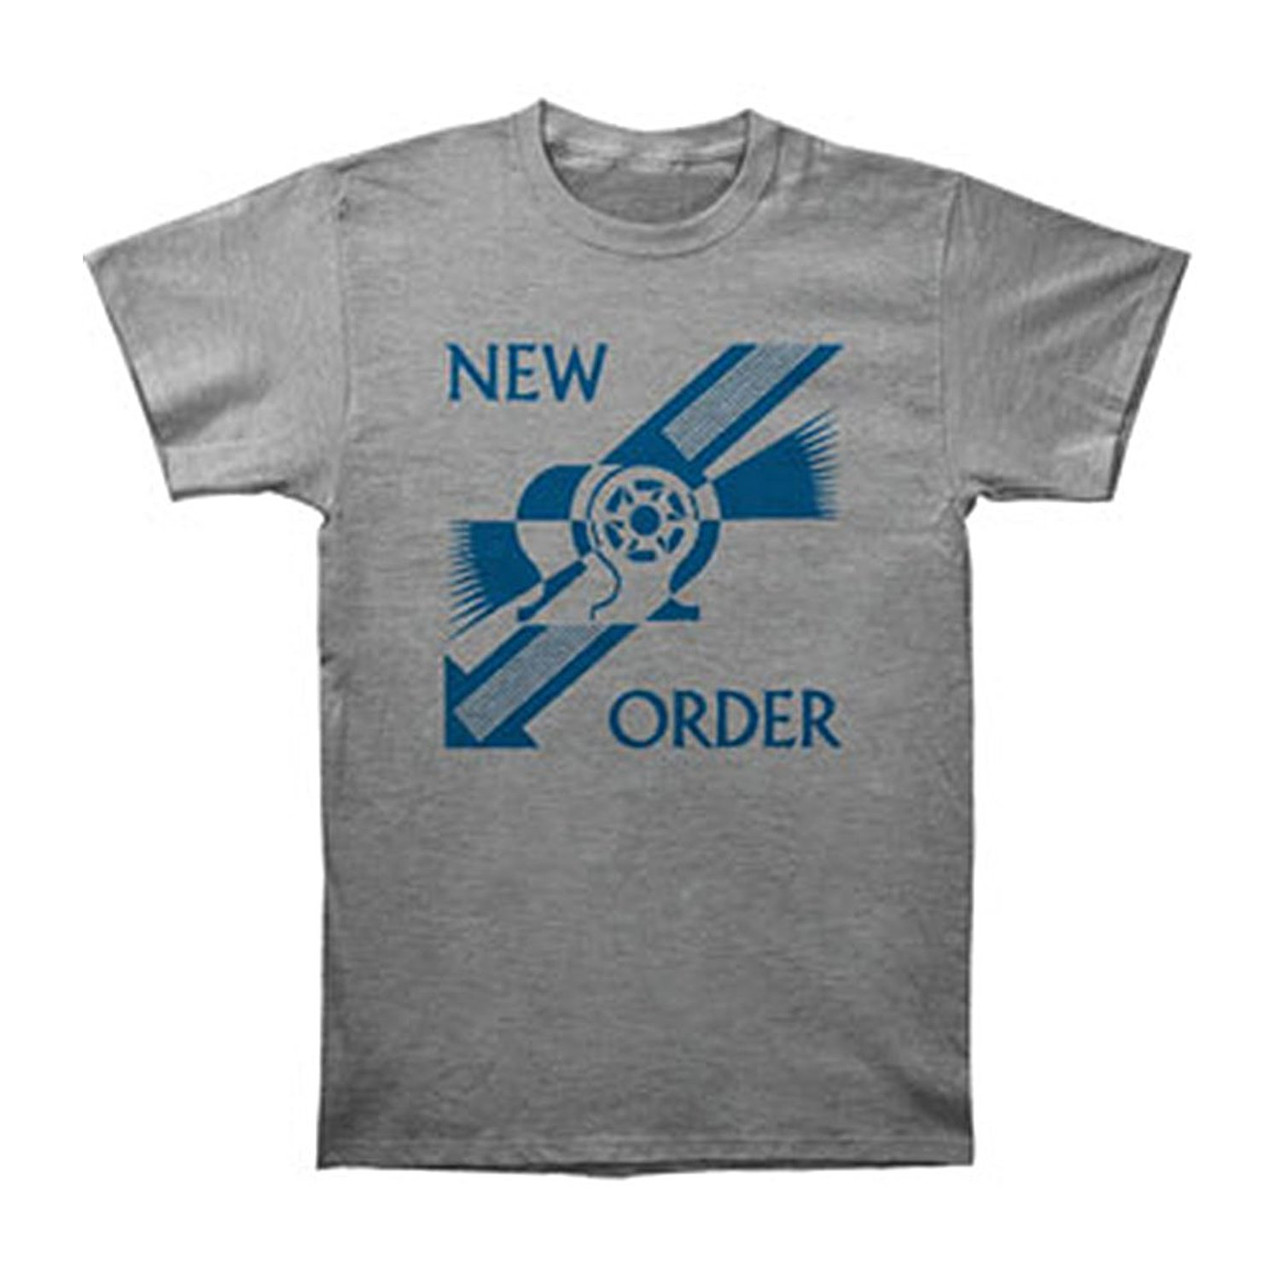 New Order T-Shirt - Everything's Gone Green - Merch2rock Alternative ...